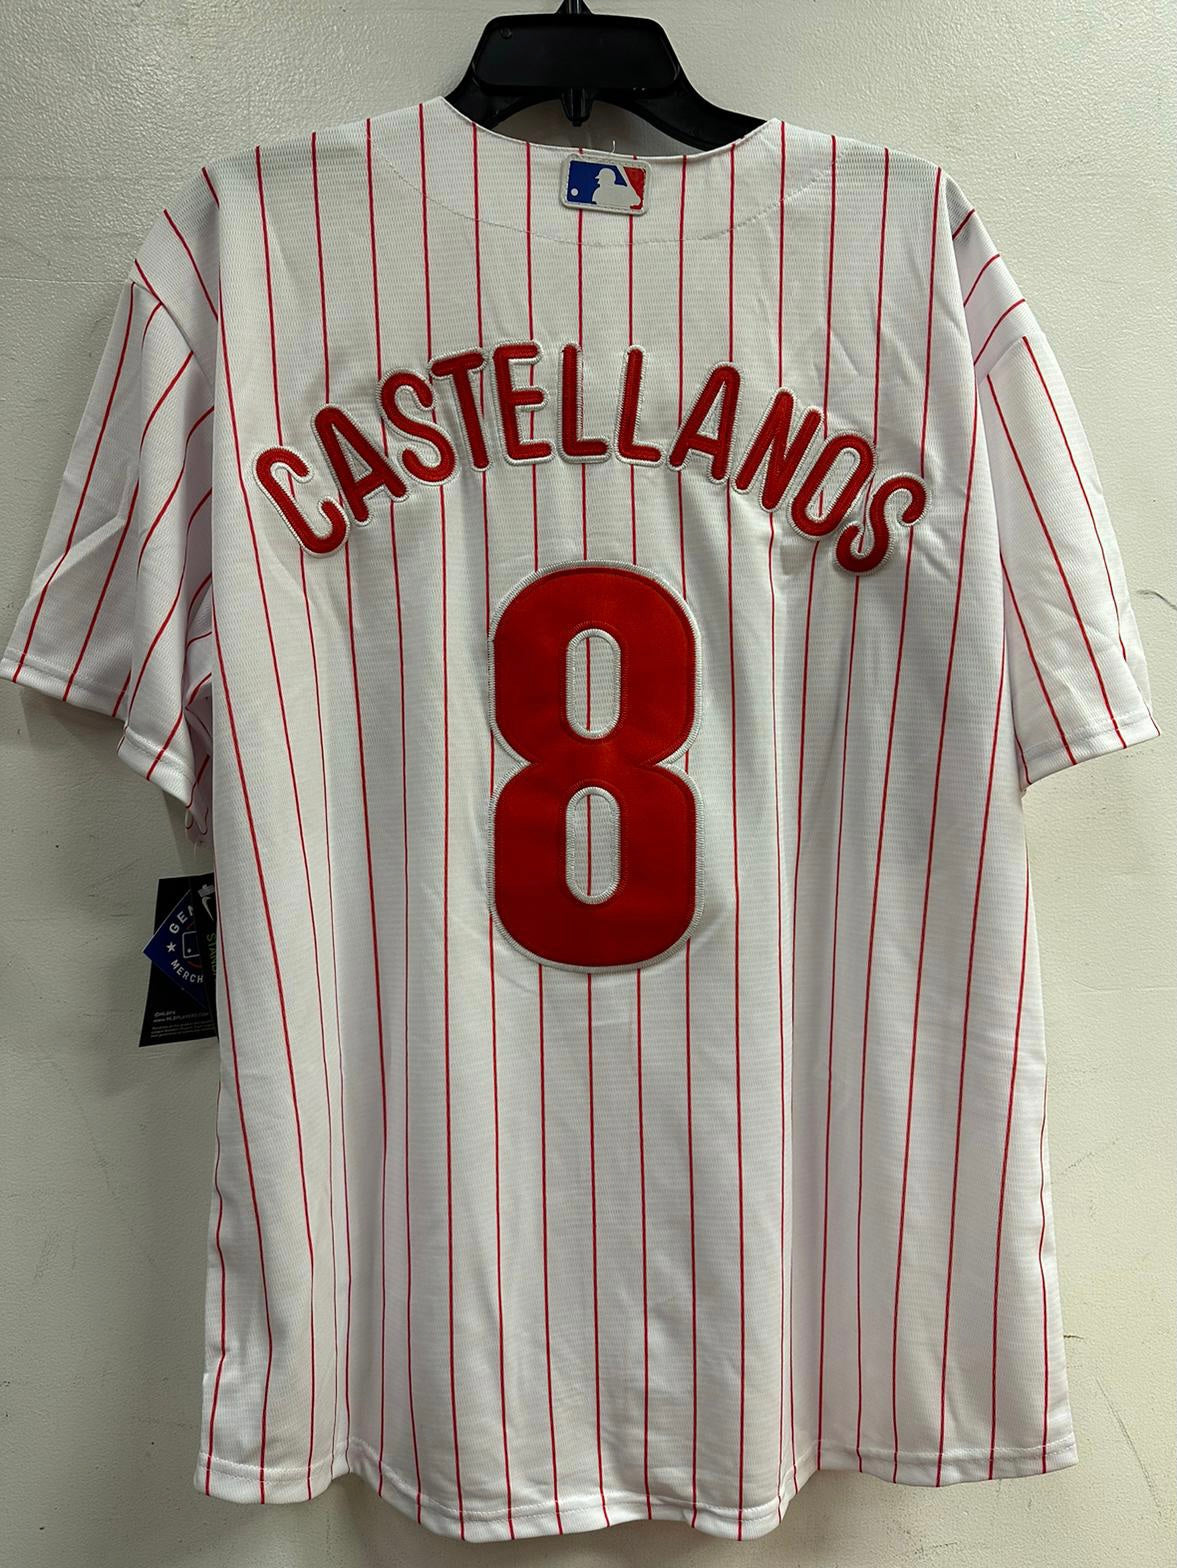 nick castellanos jersey number